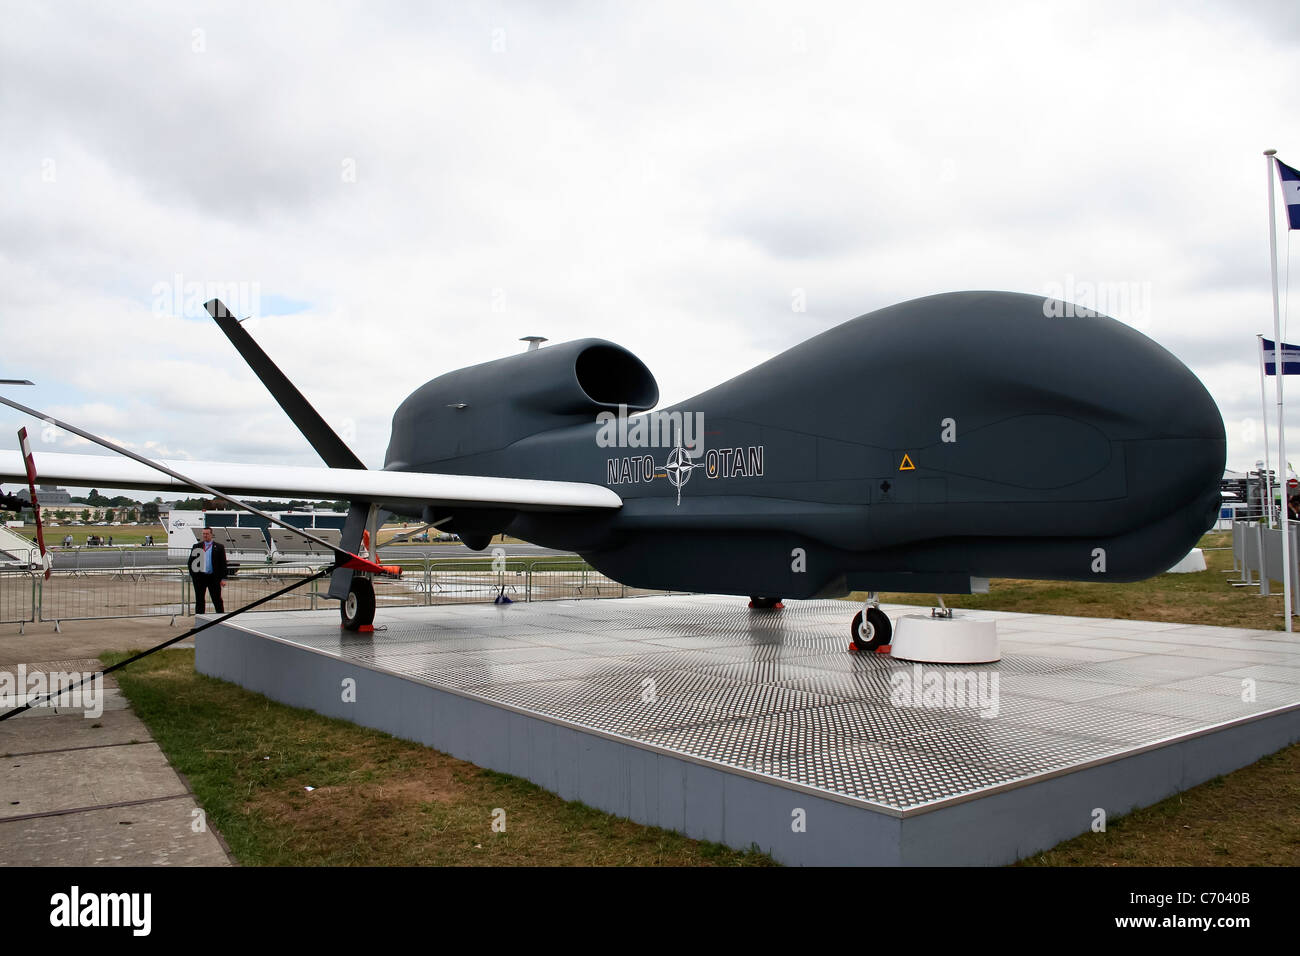 Northrop Grumman RQ-4 Global Hawk UAV (unmanned aerial vehicle) at the  Farnborough International Airshow Stock Photo - Alamy